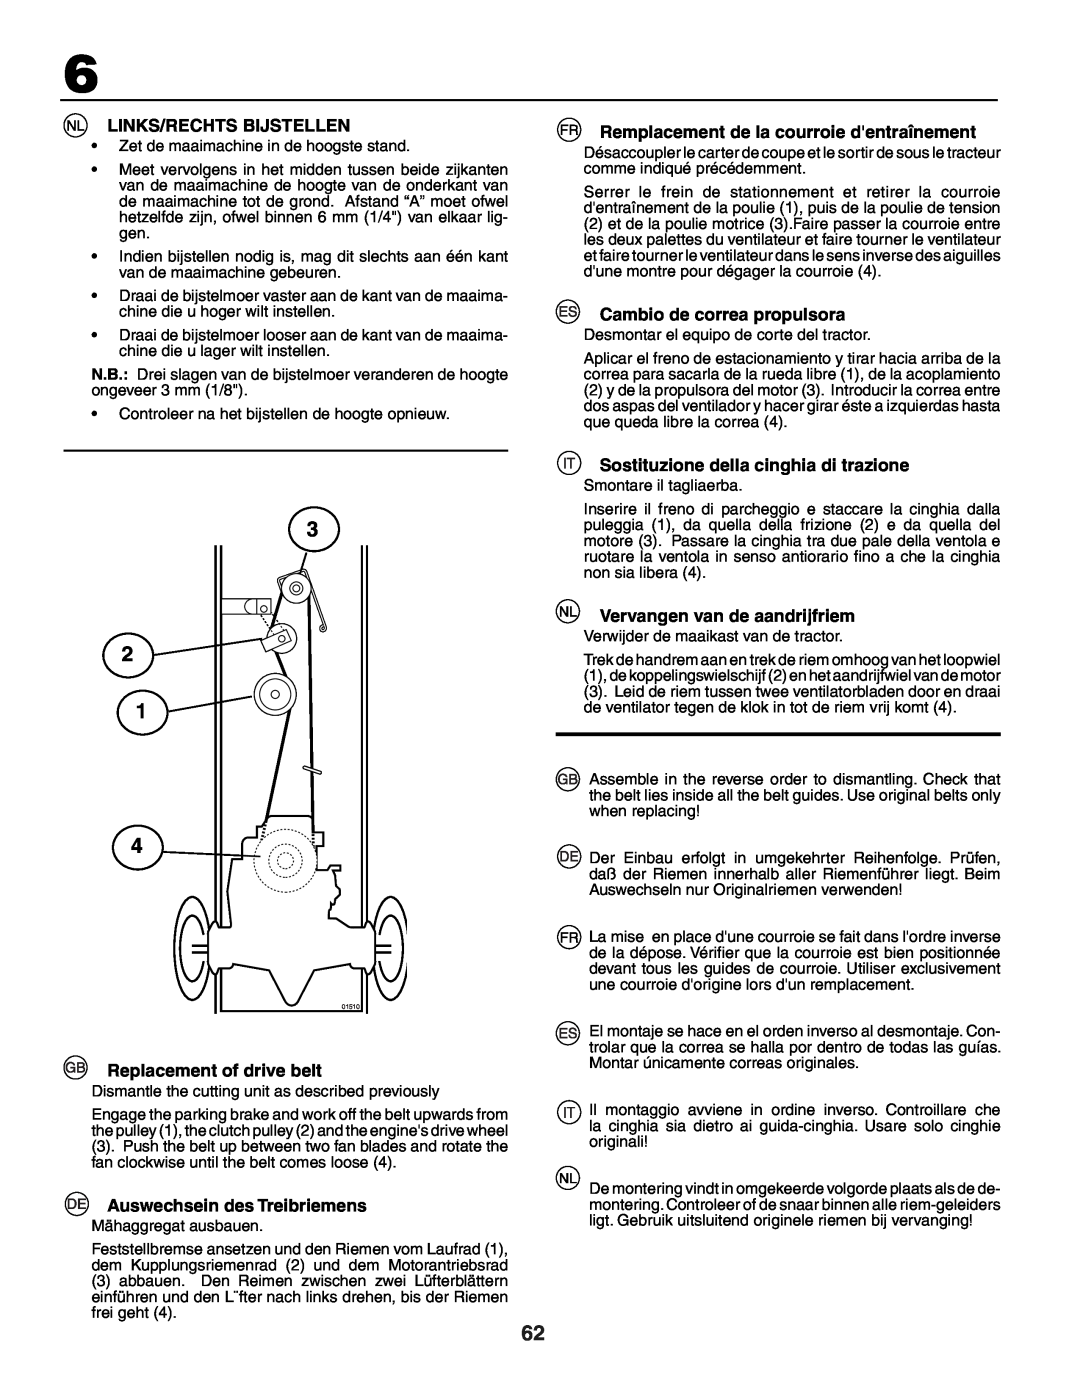 Husqvarna YTH151 instruction manual Links/Rechts Bijstellen, Replacement of drive belt, Auswechsein des Treibriemens 